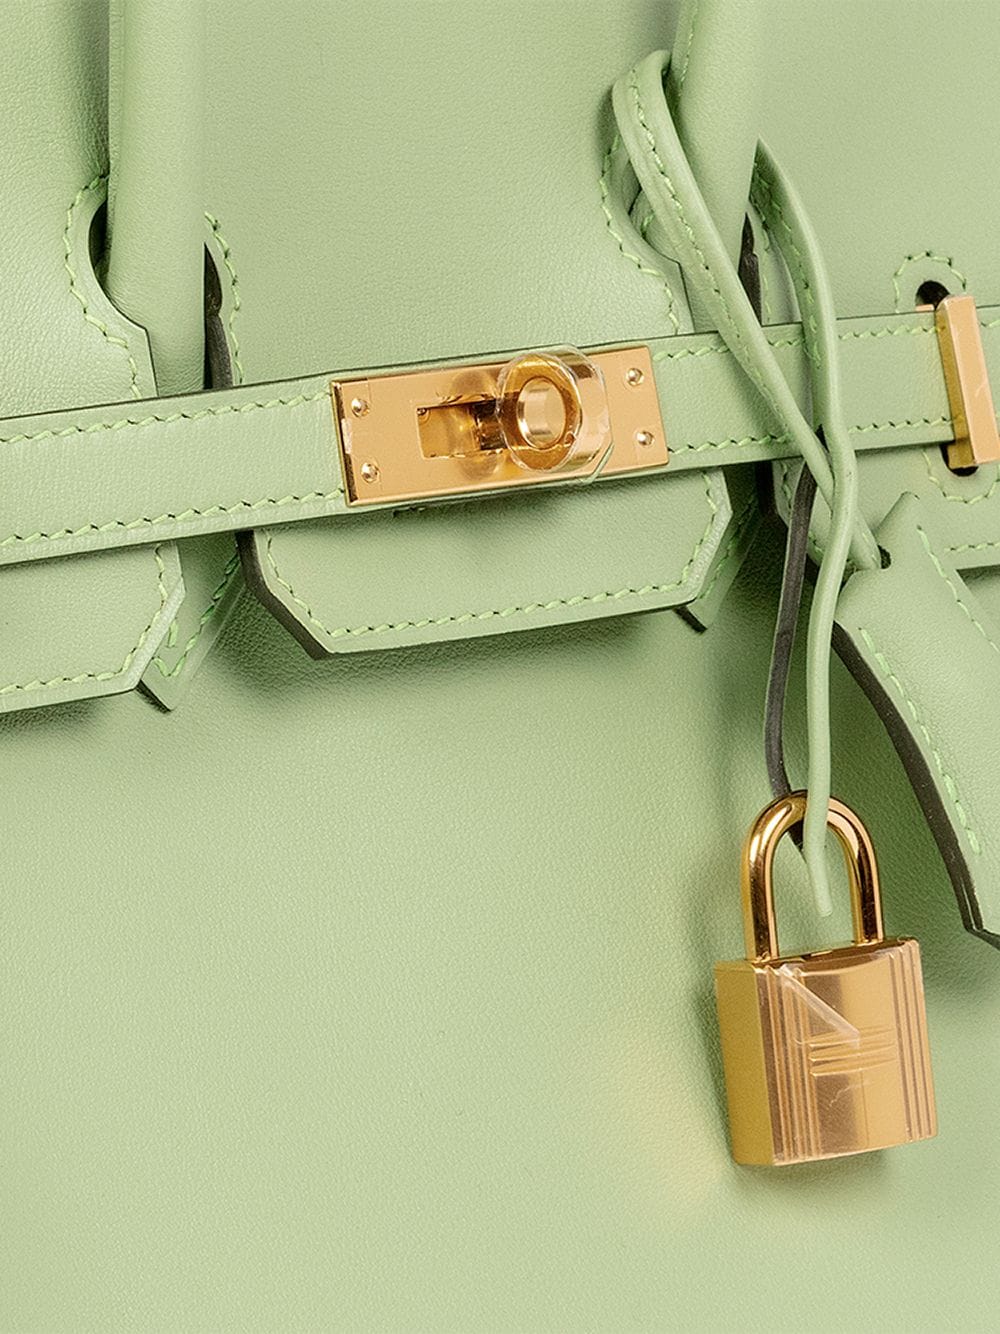 Hermès Birkin 25 Handbag Togo - Farfetch